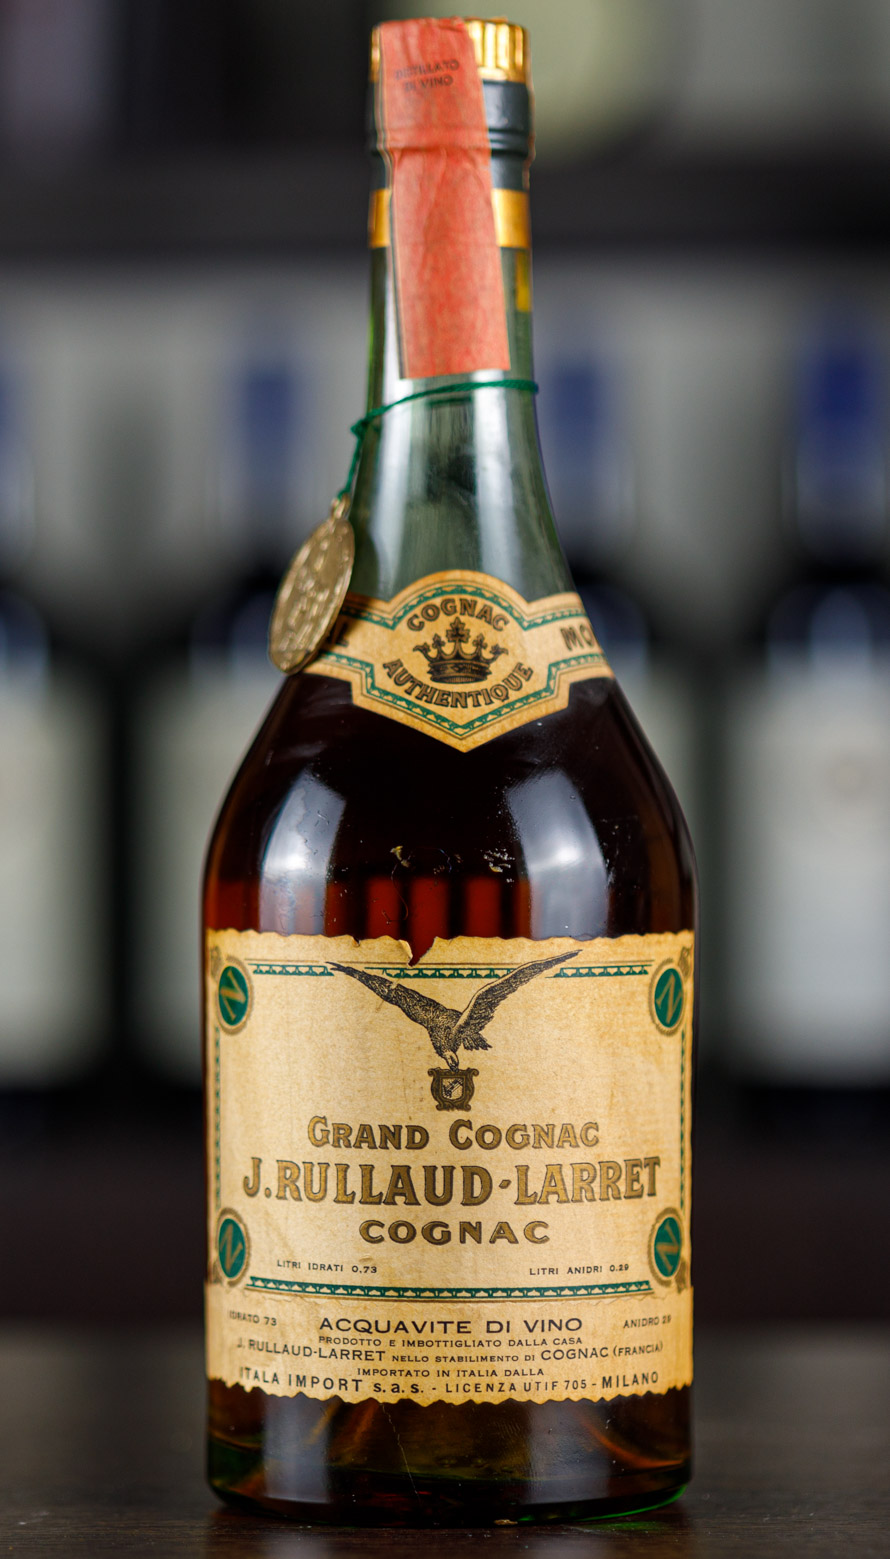 J. Rullaud-Larret Grand Cognac